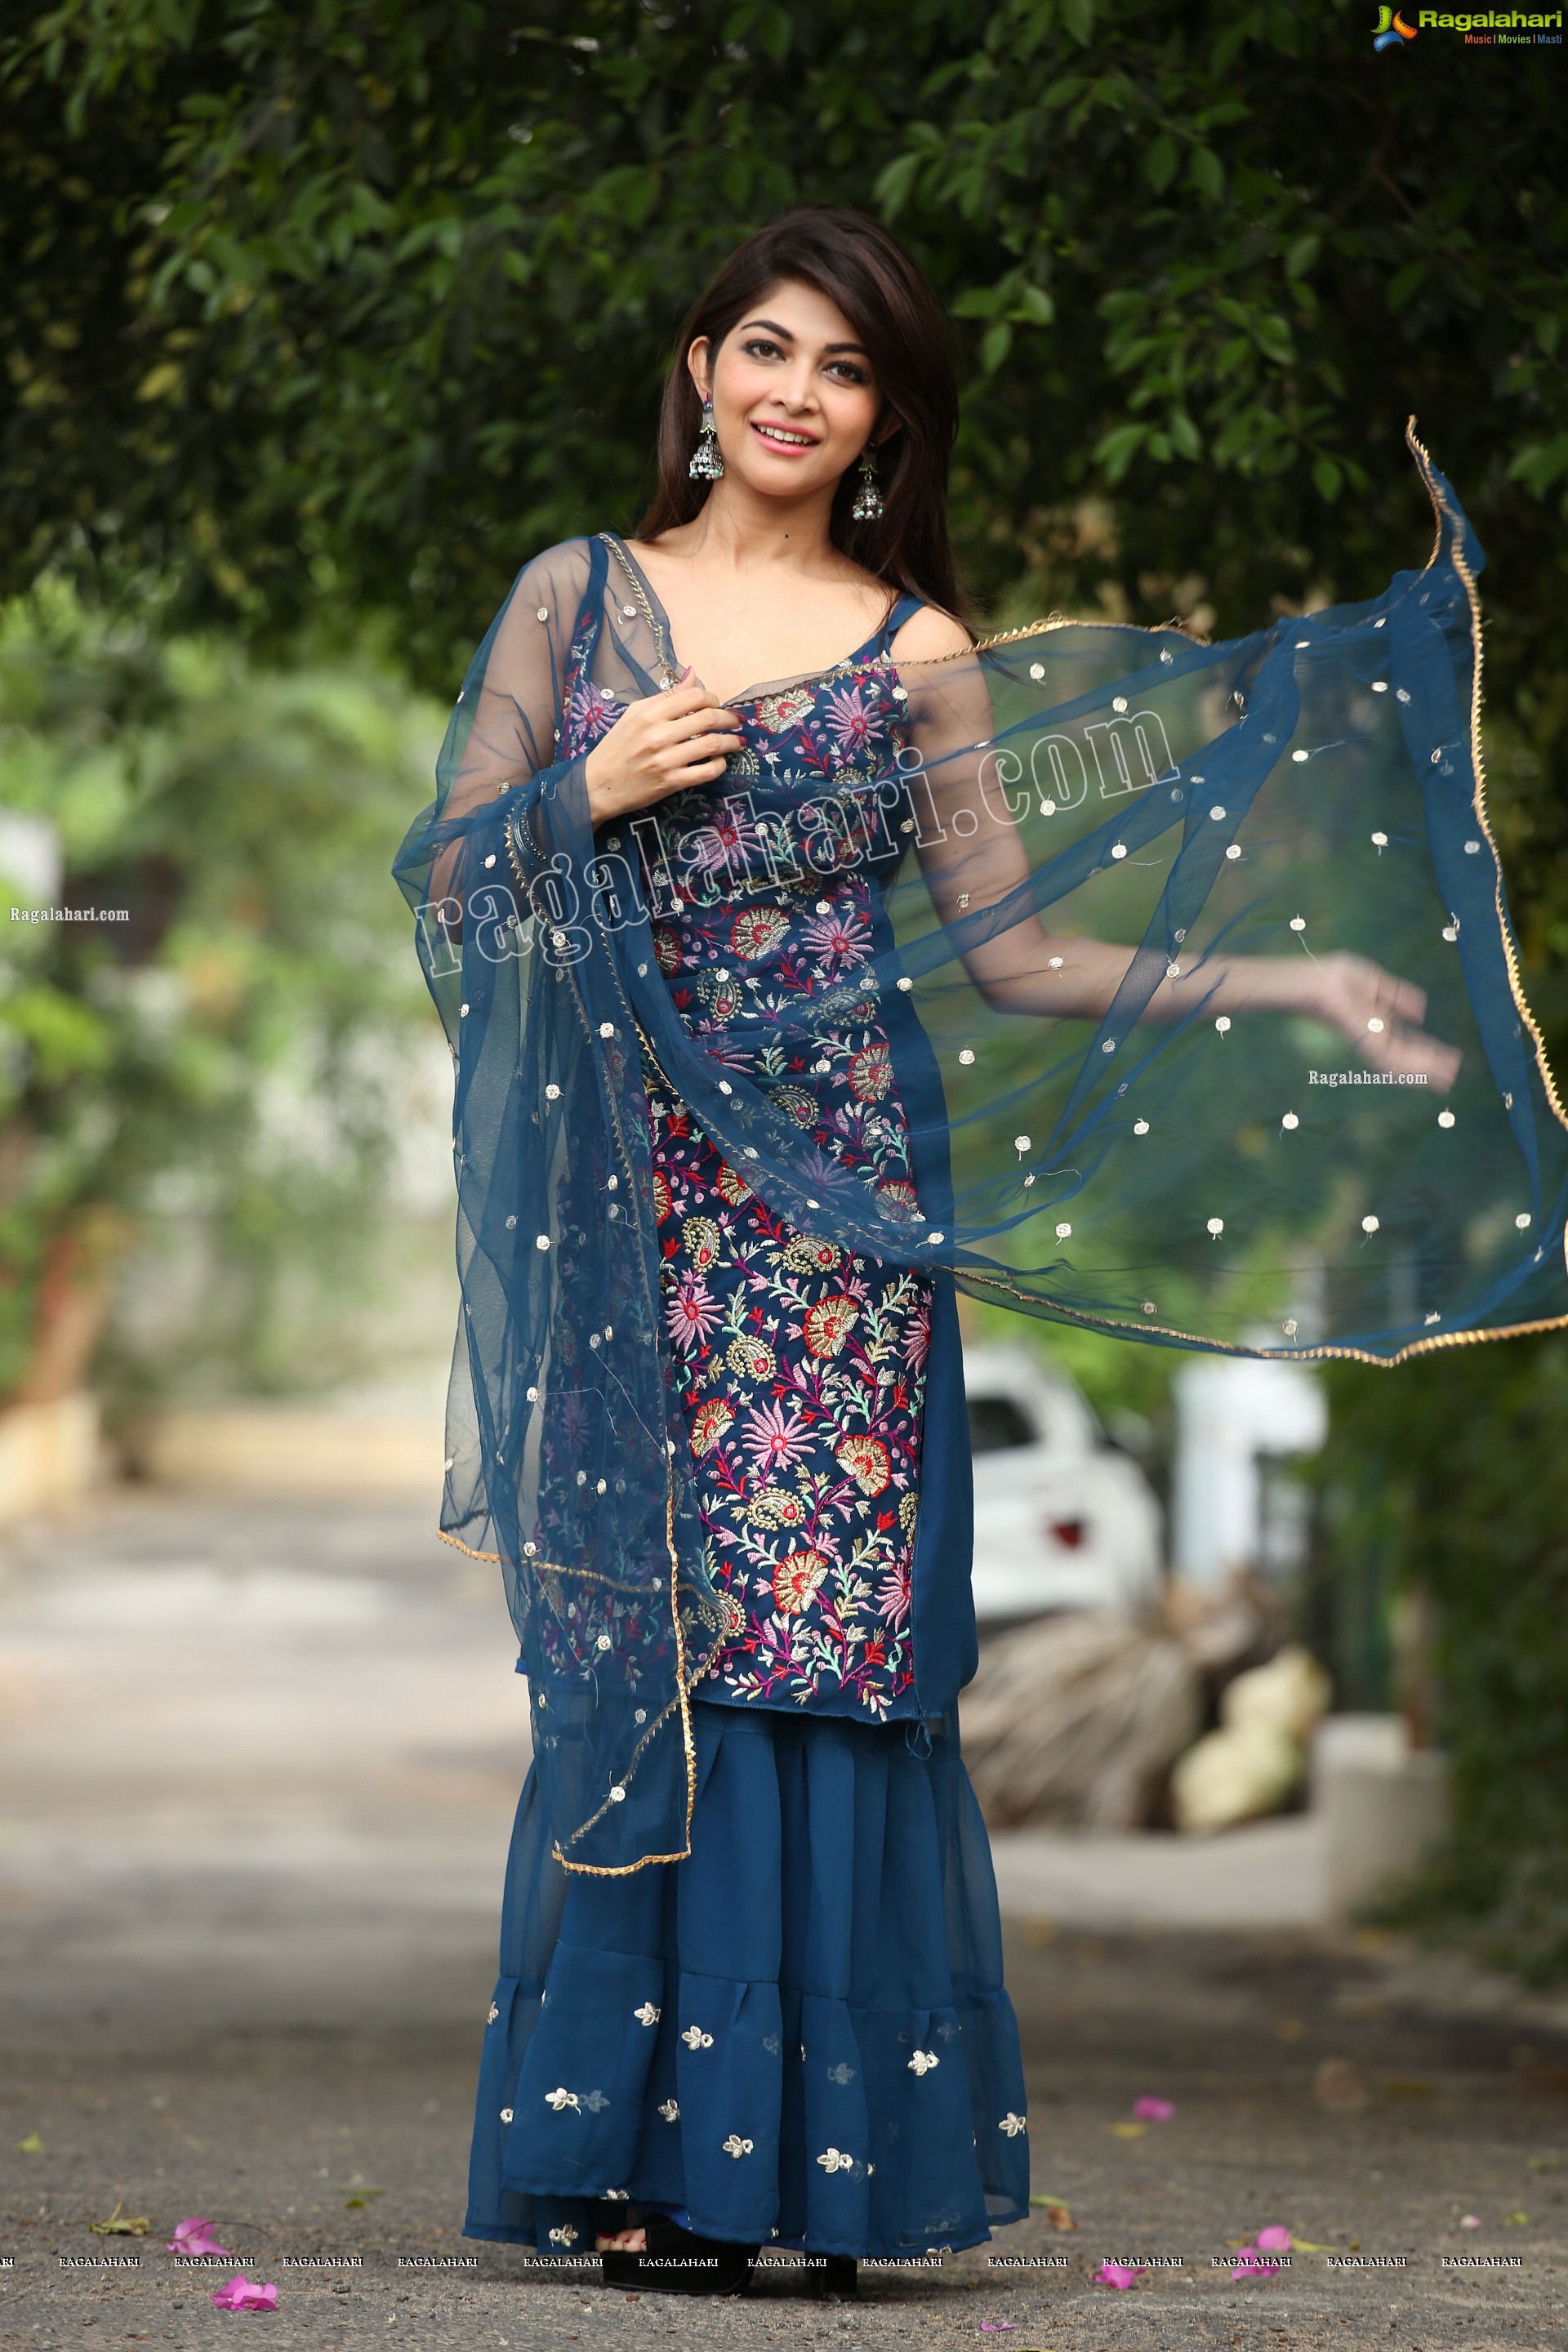 Srijita Ghosh in Teal Blue Lehenga with Long Kurti, Exclusive Photo Shoot